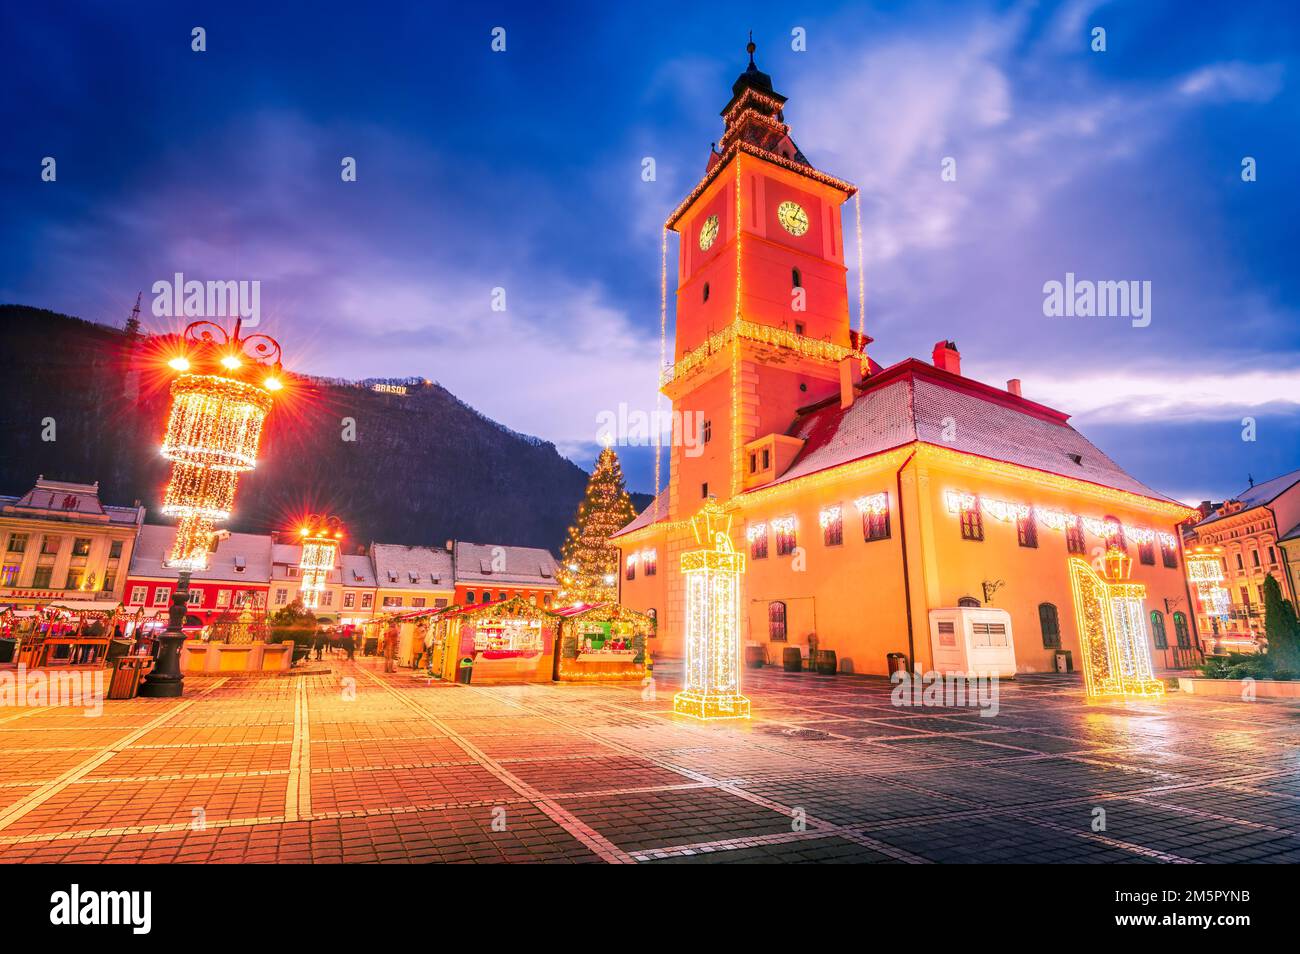 Brasov, Romania. Night illuminated scenic Main Square with Christmas Market, winter holidays. Stock Photo